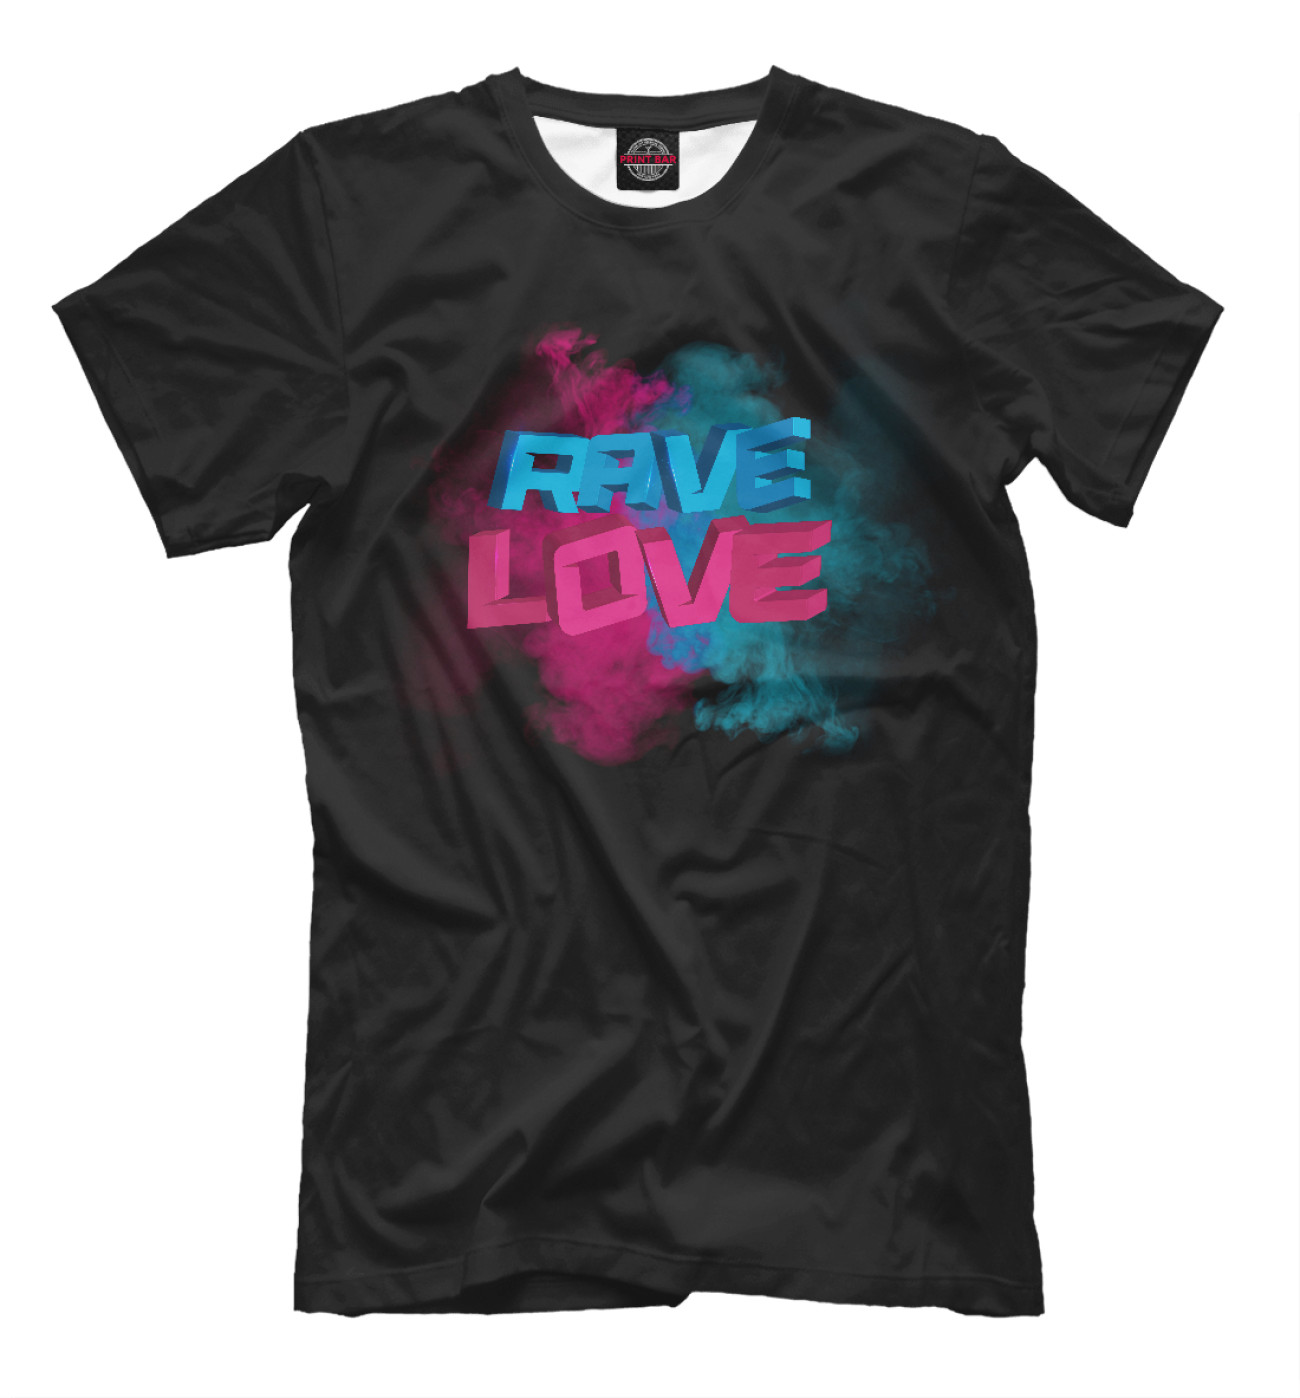 Мужская Футболка RAVE LOVE, артикул: DJS-606528-fut-2